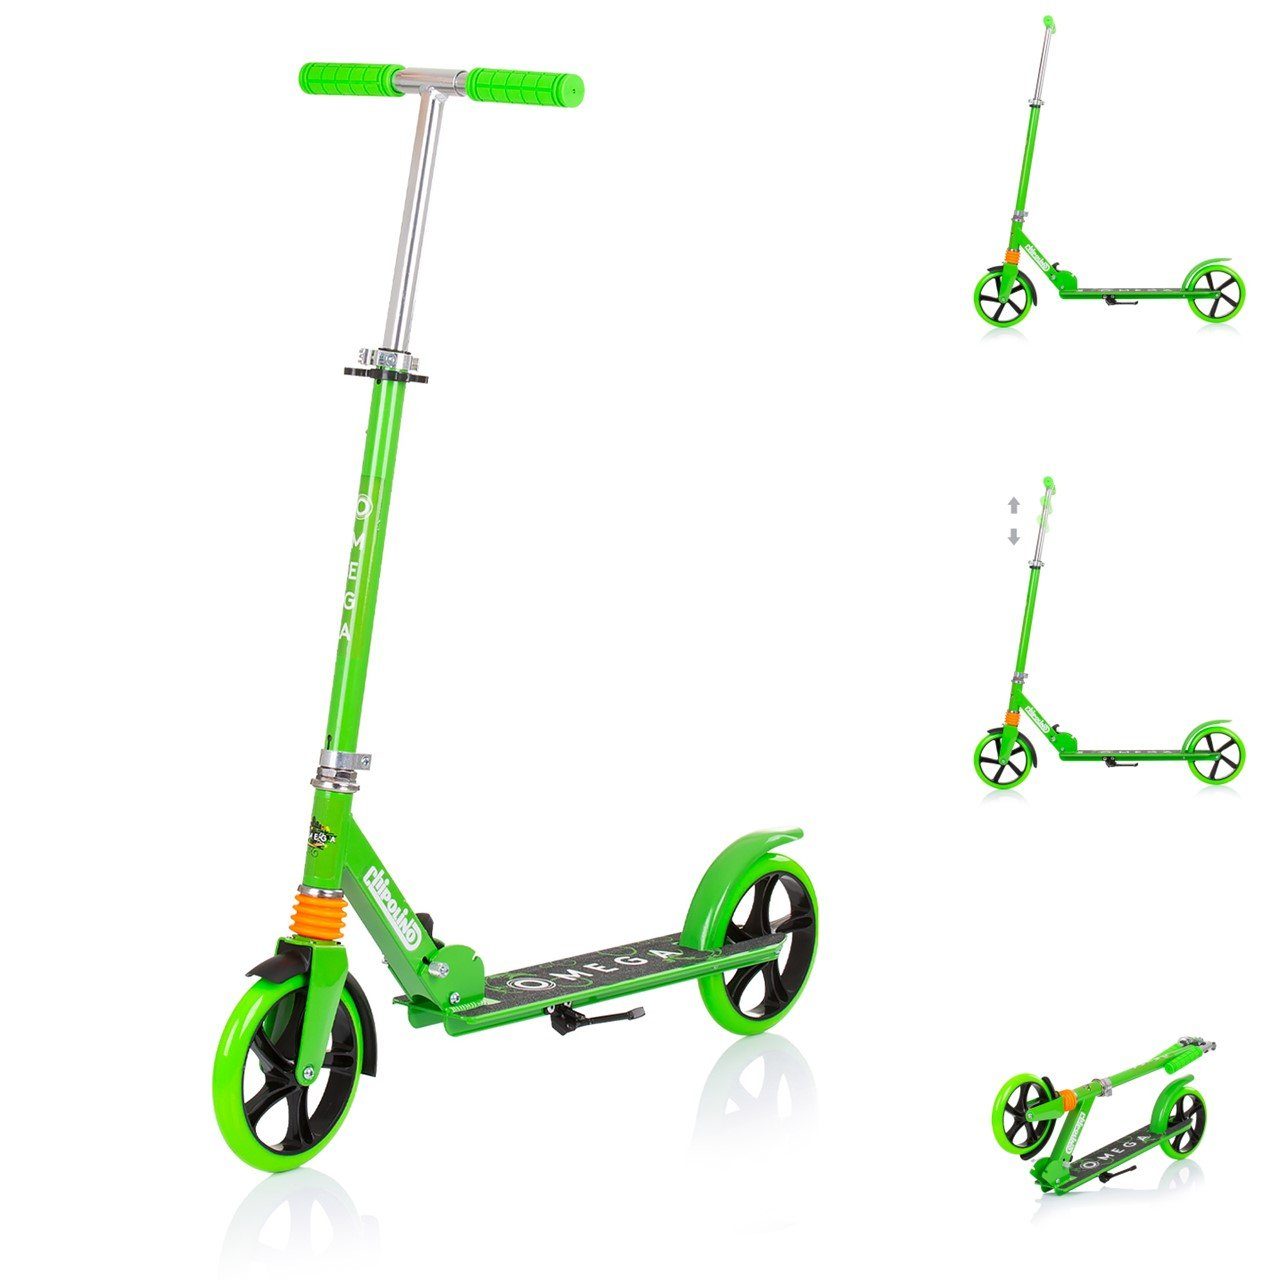 Chipolino Cityroller Kinderroller Omega PU Räder, ABEC-7 Lager verstellbar faltbar Bremse grün | Kinderroller